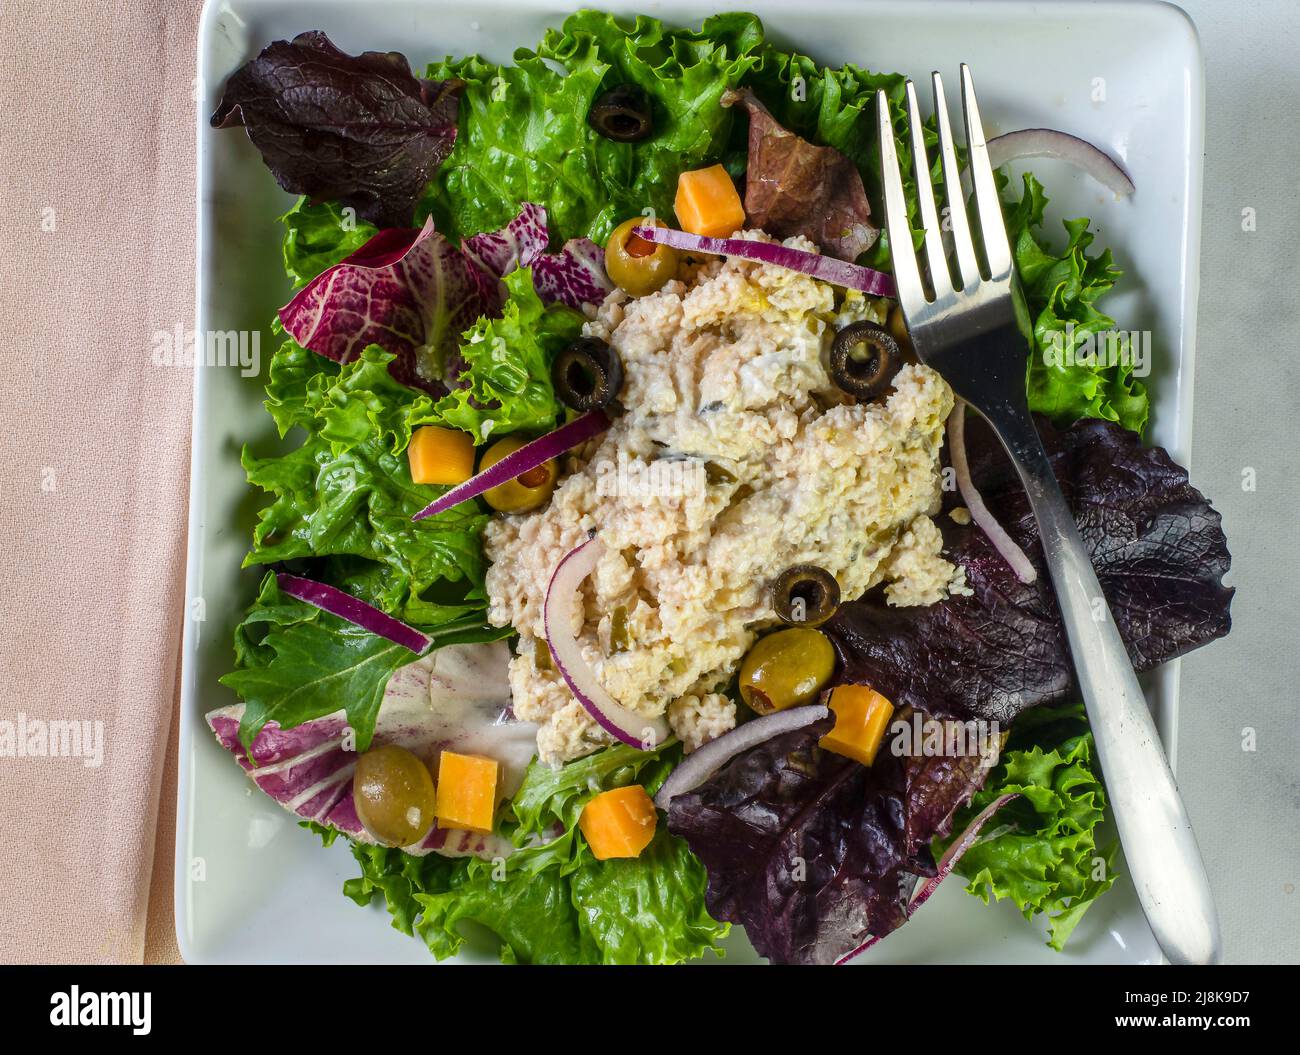 https://c8.alamy.com/comp/2J8K9D7/salad-plate-with-ham-salad-on-top-and-mixed-greens-2J8K9D7.jpg